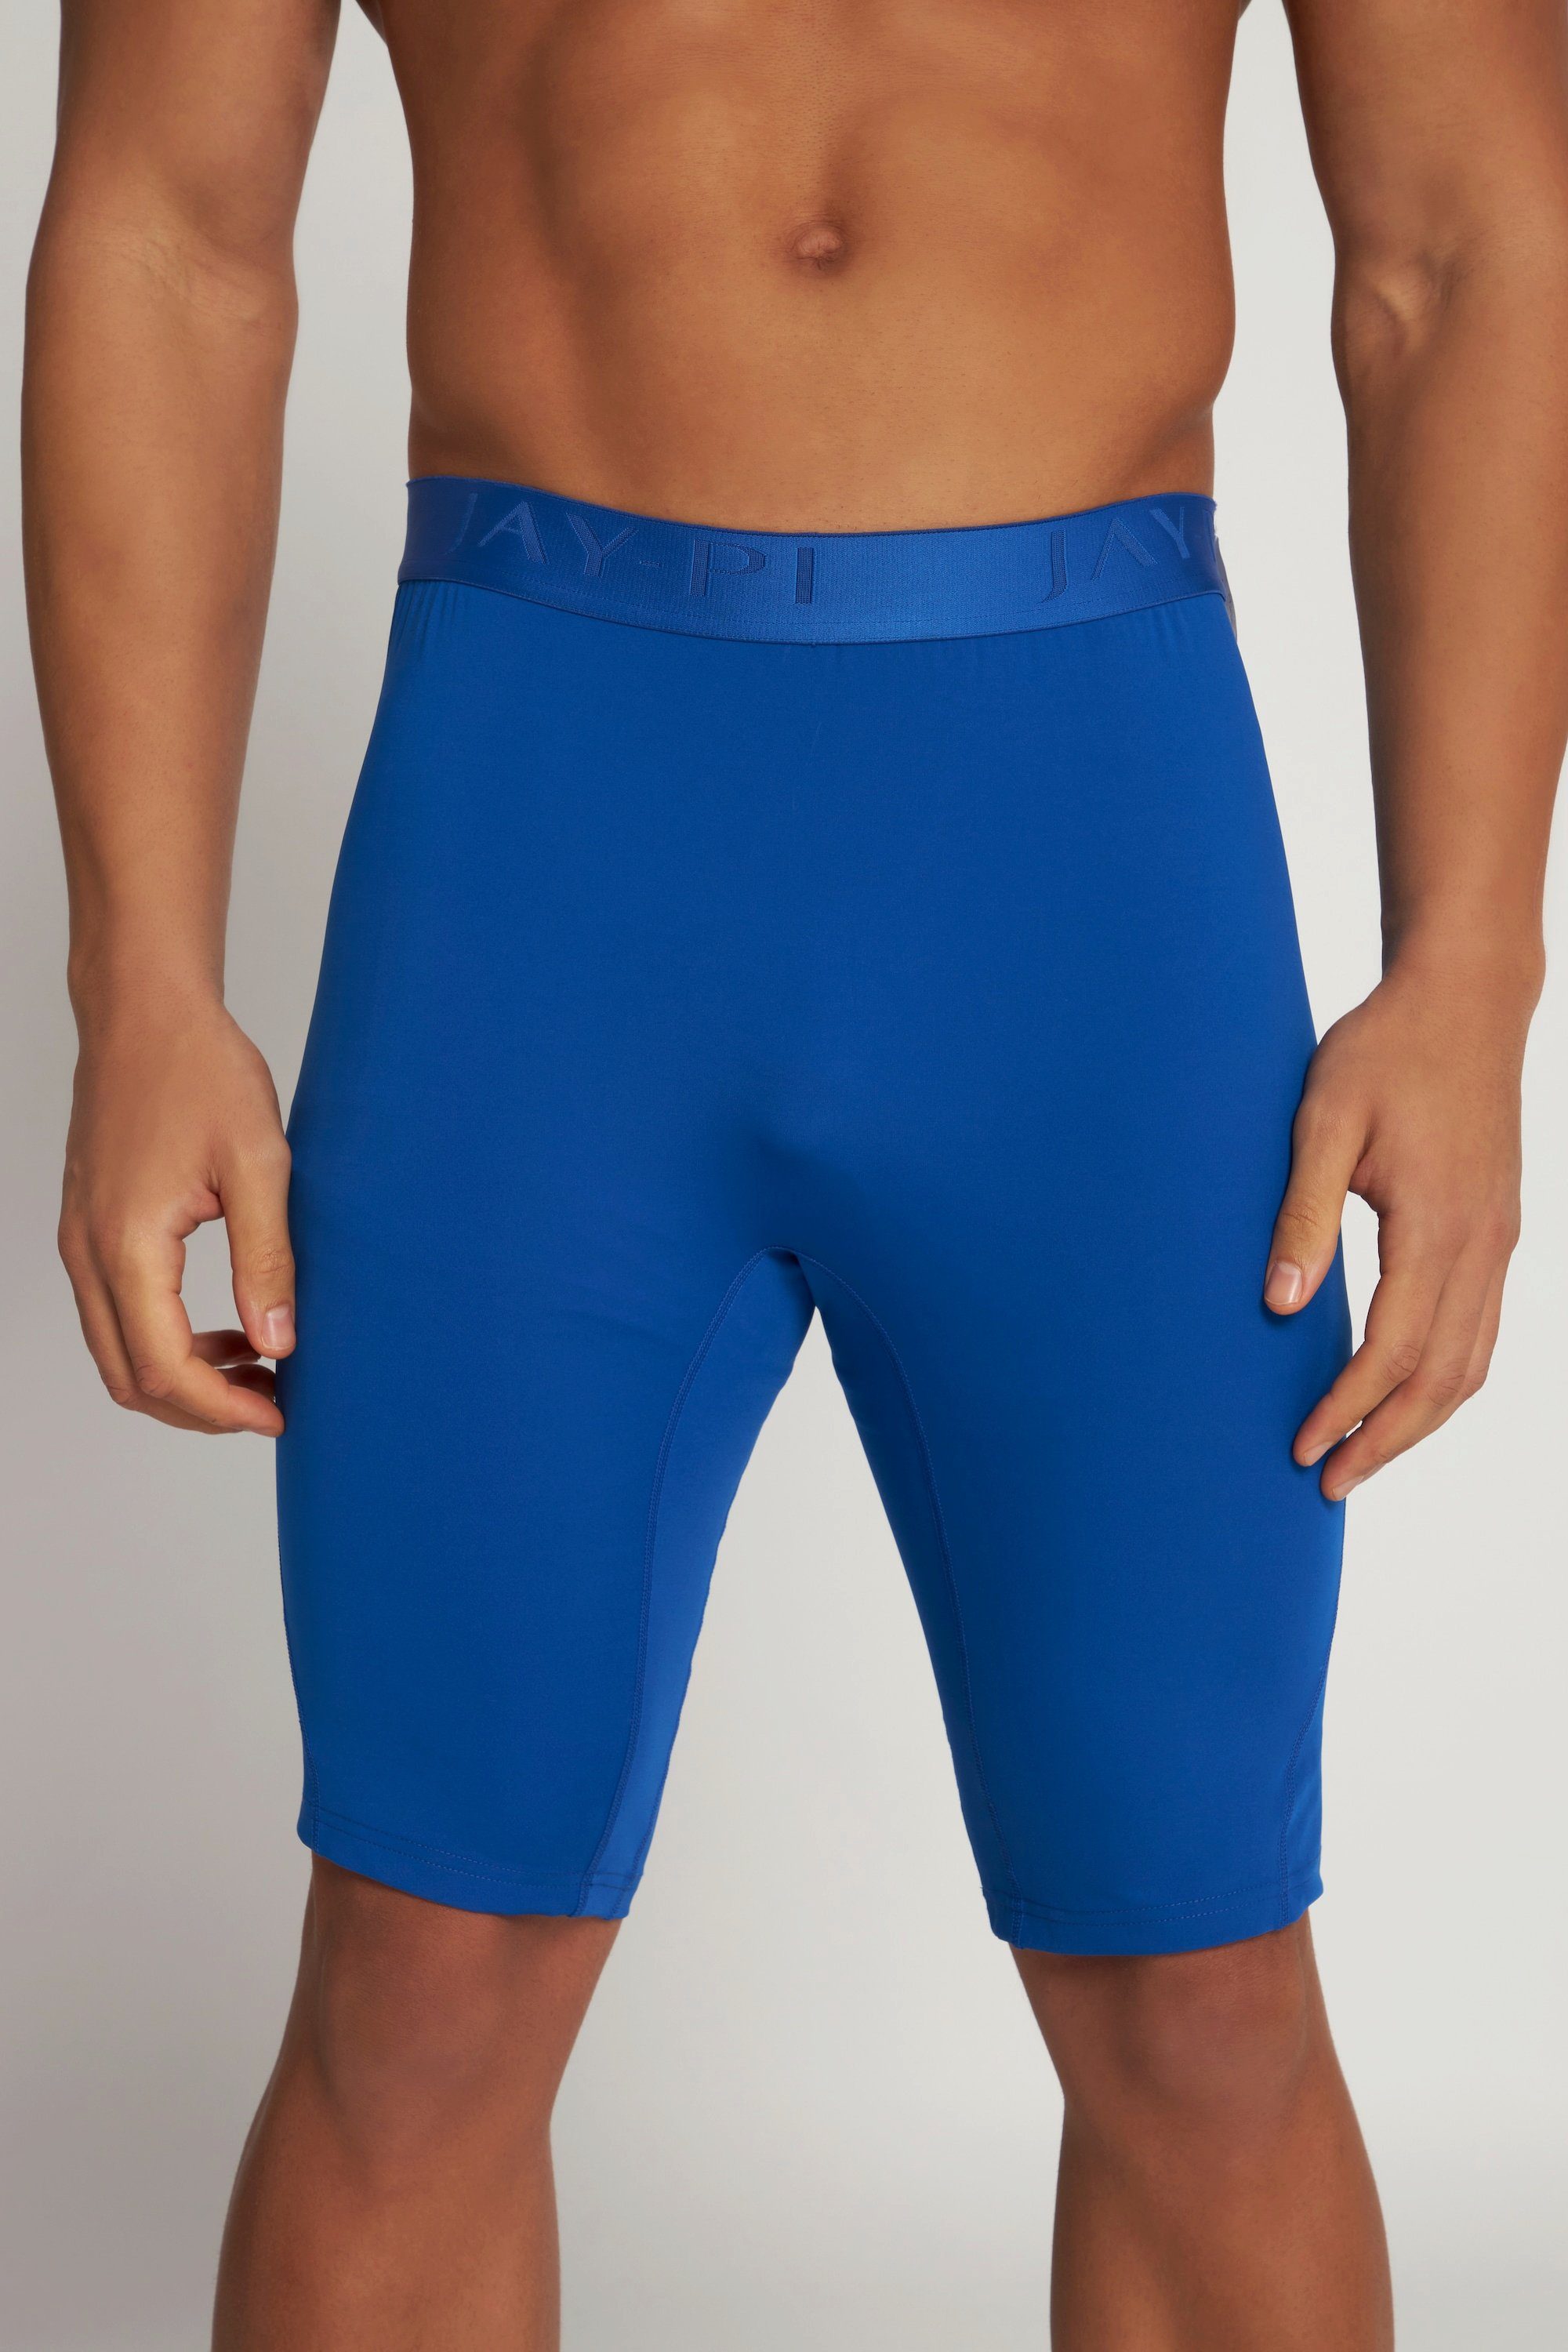 JP1880 Boxershorts Longpants Fitness Unterhose blau